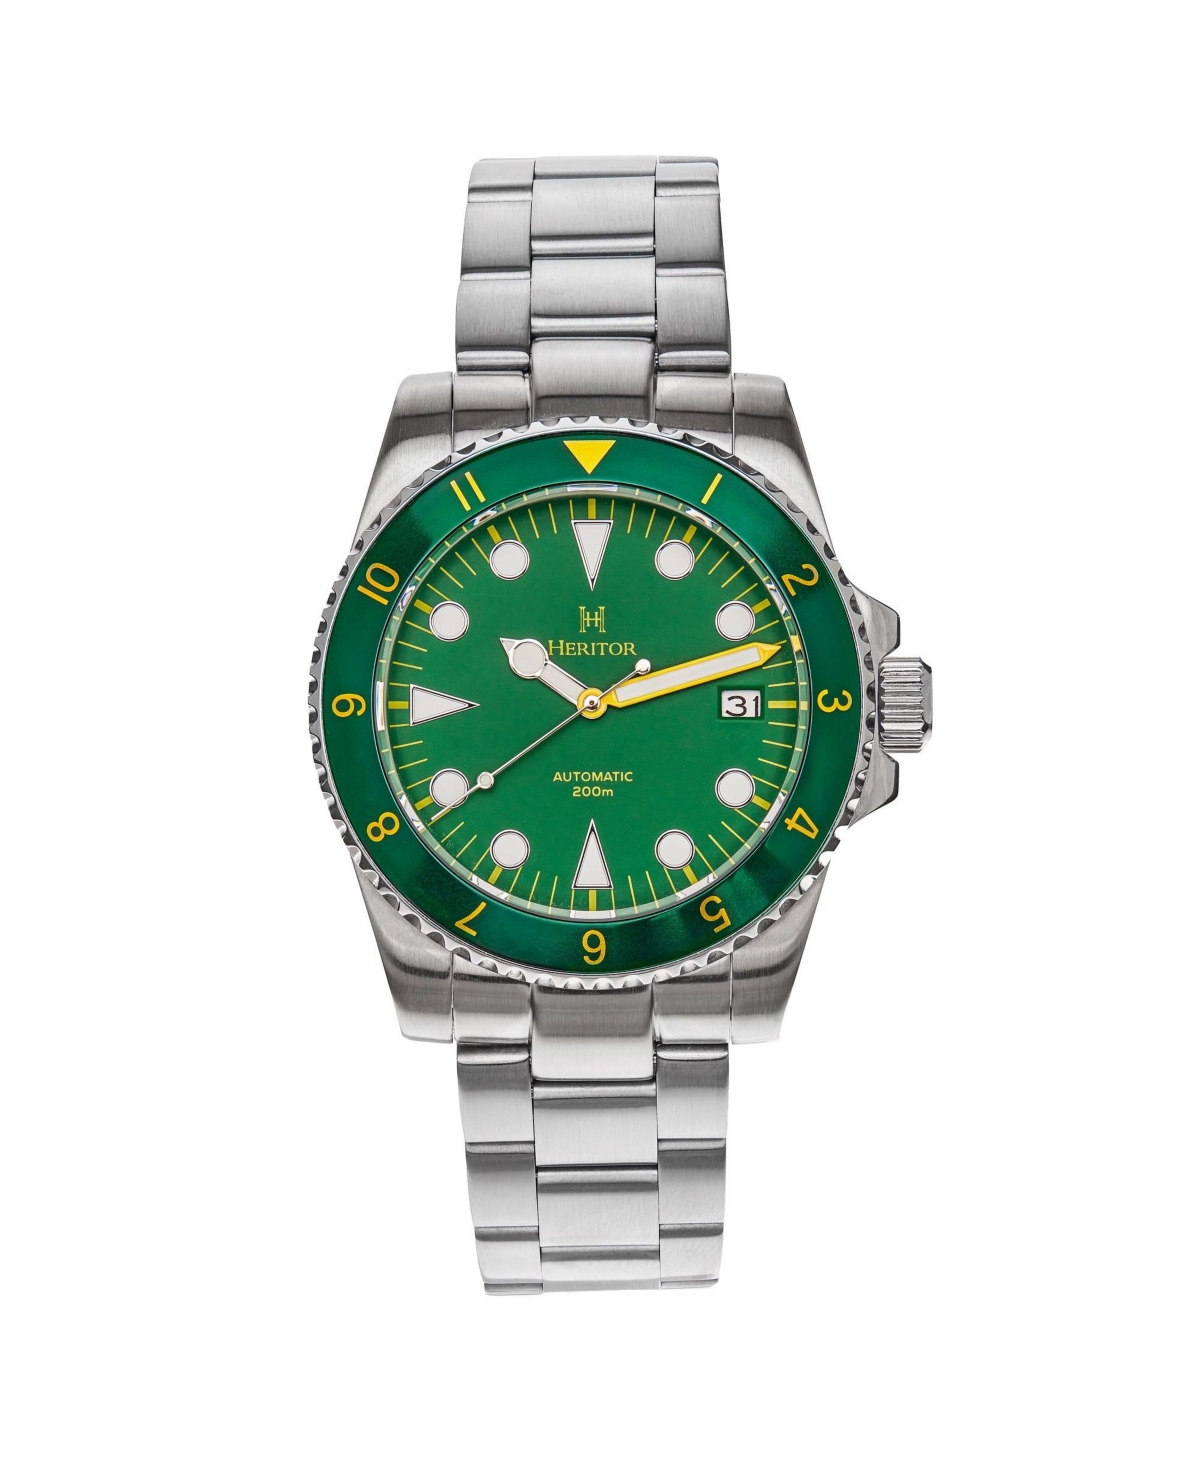 Men Luciano Stainless Steel Watch - Green, 41mm - Green